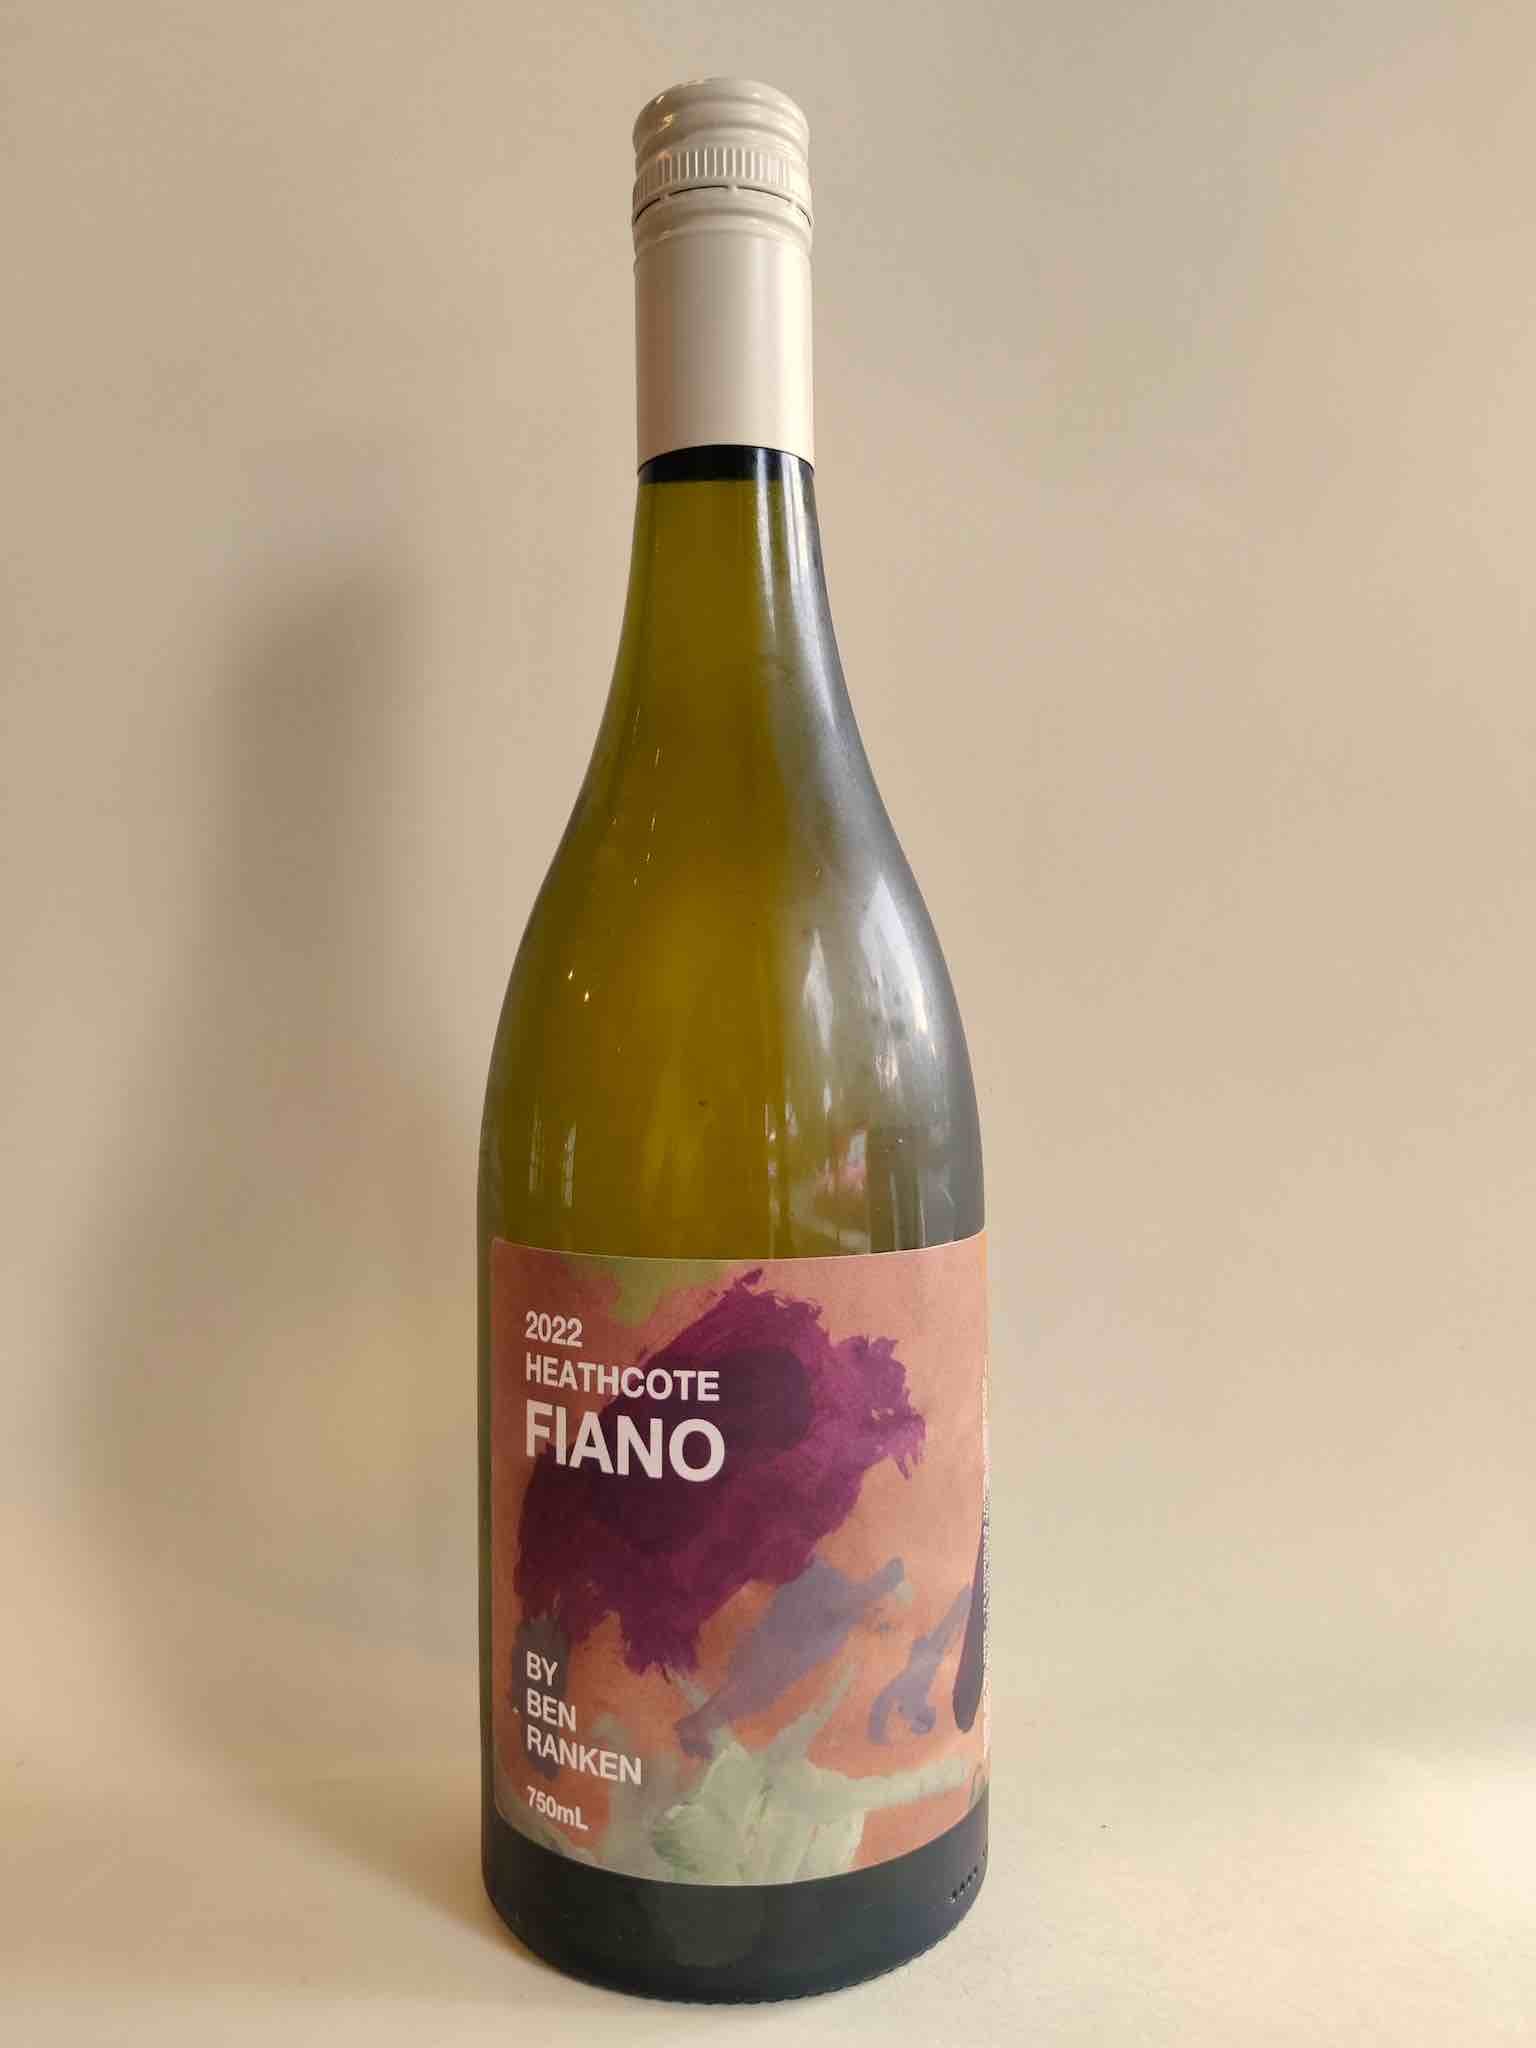 A bottle of Wilimee By Ben Ranken Heathcote Fiano. 